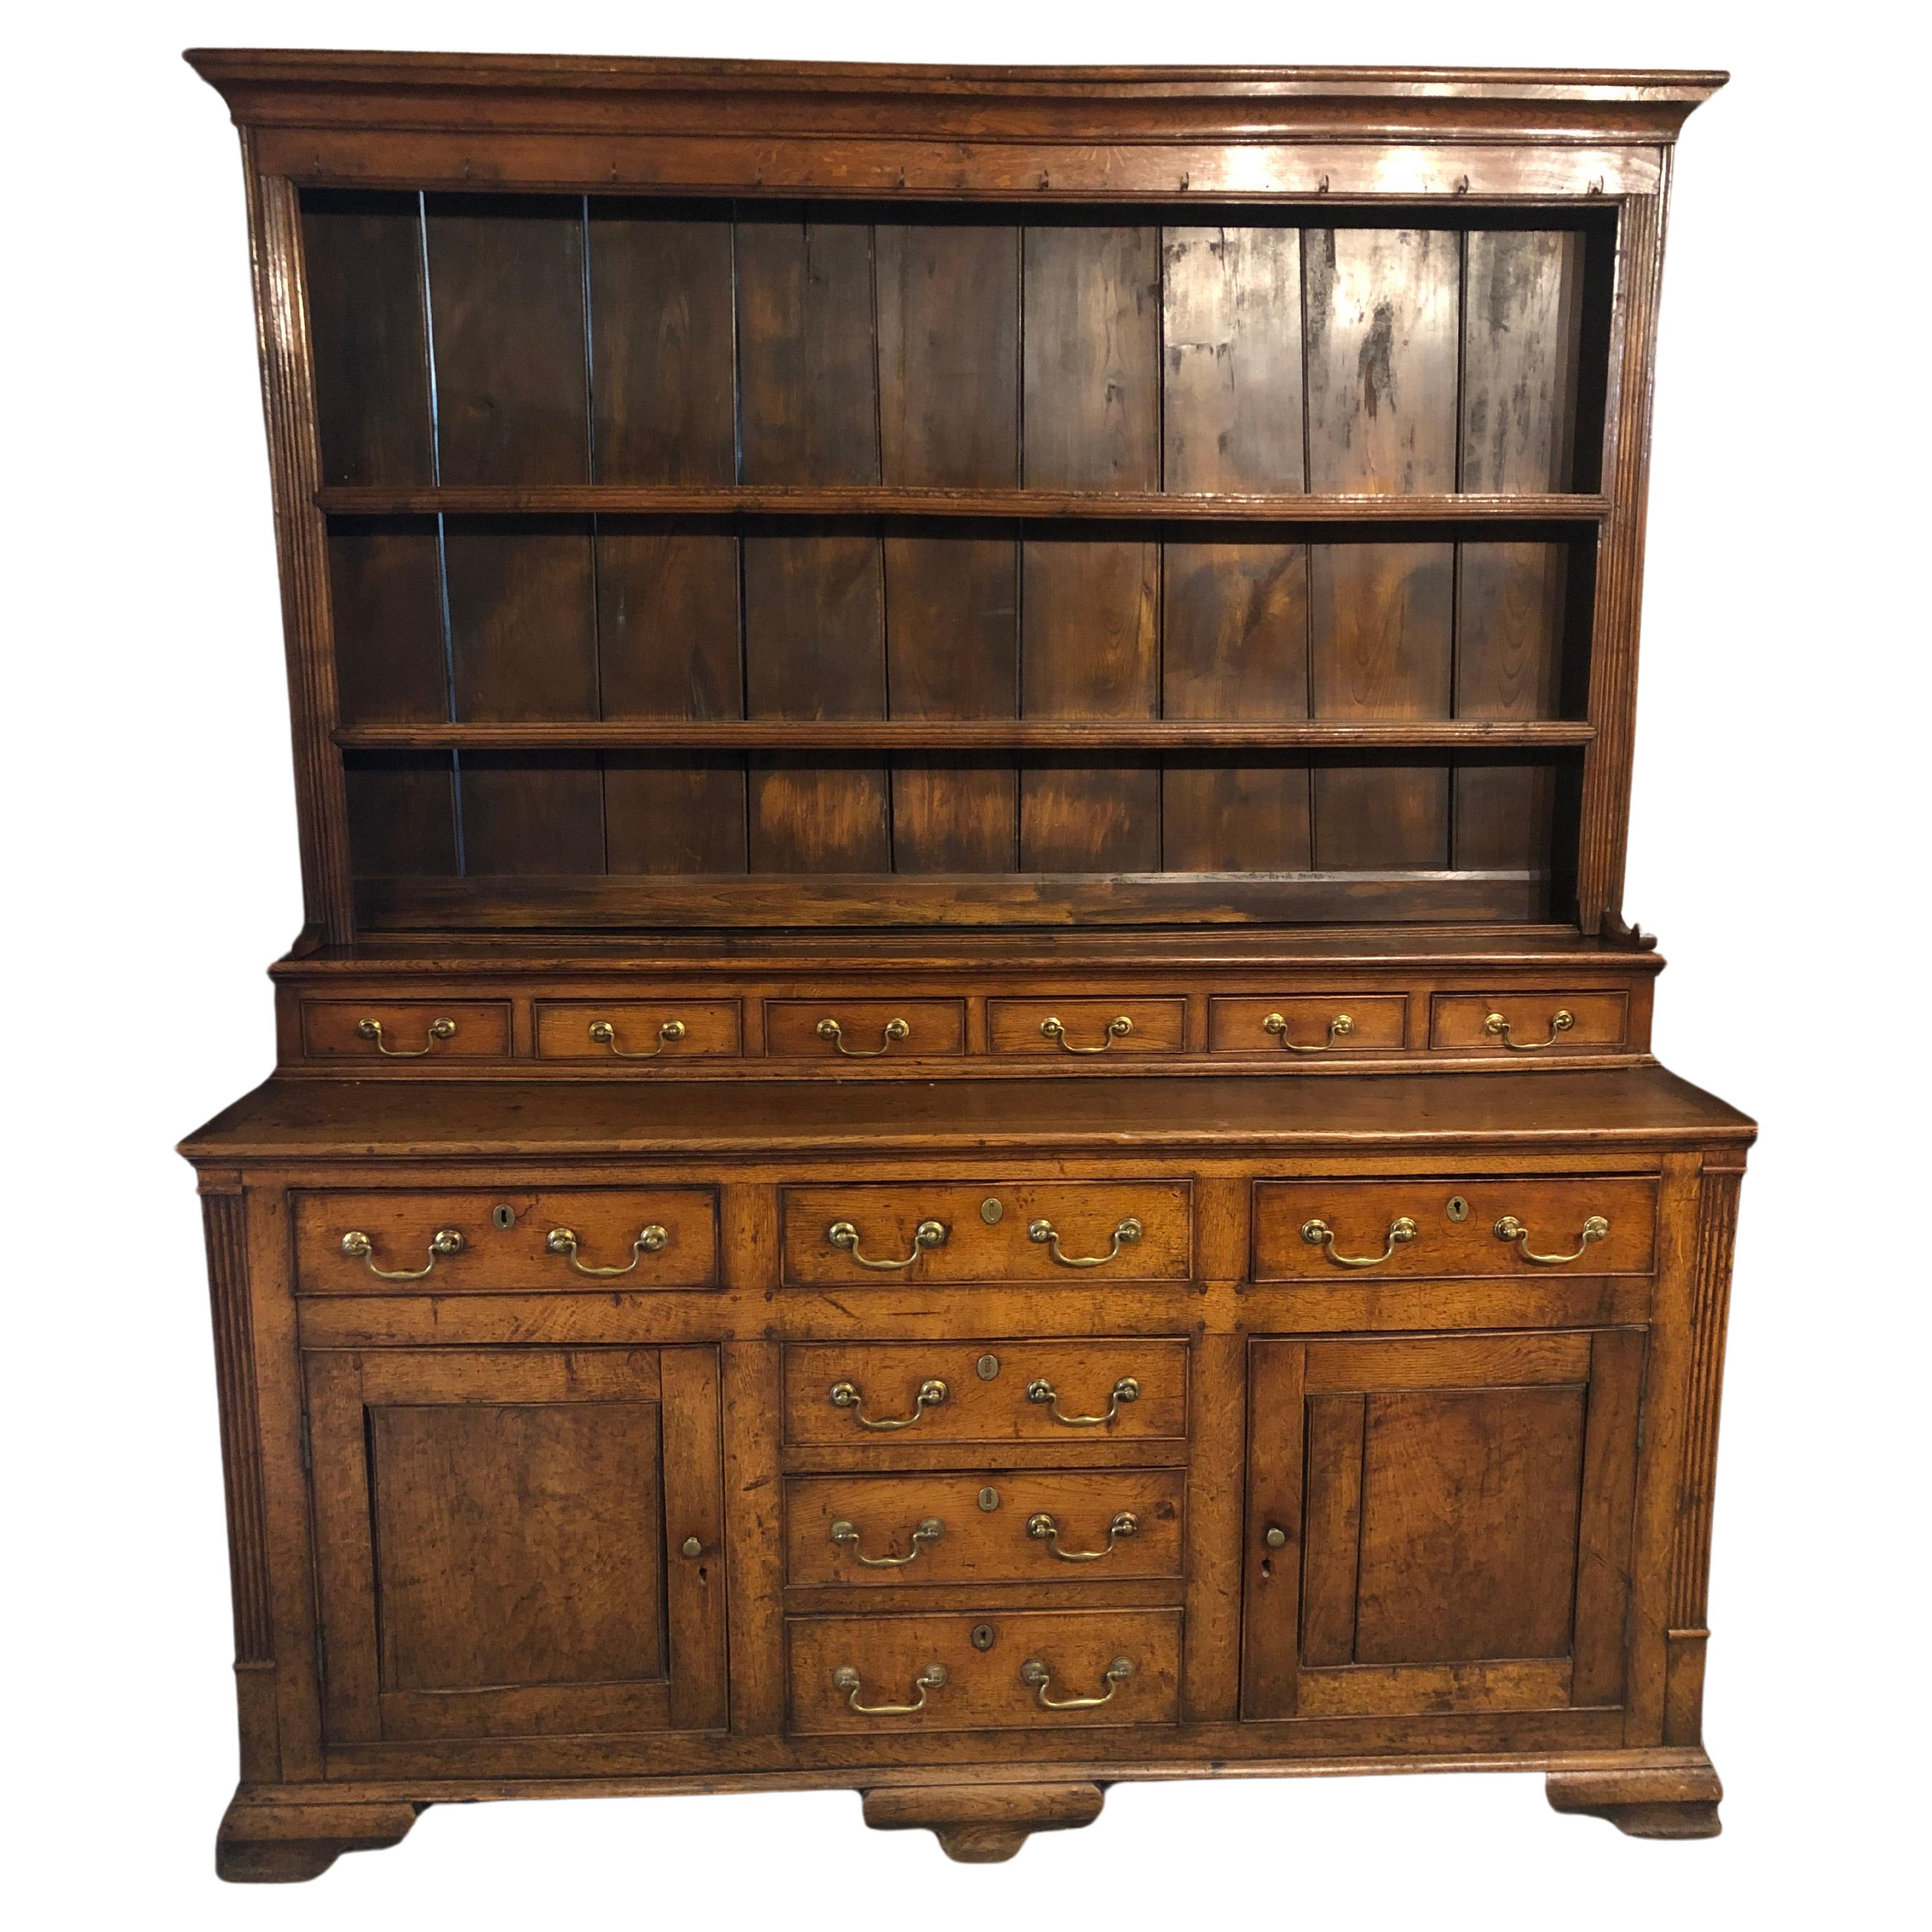 An excellent Welsh oak dresser c1760 in original condition For Sale